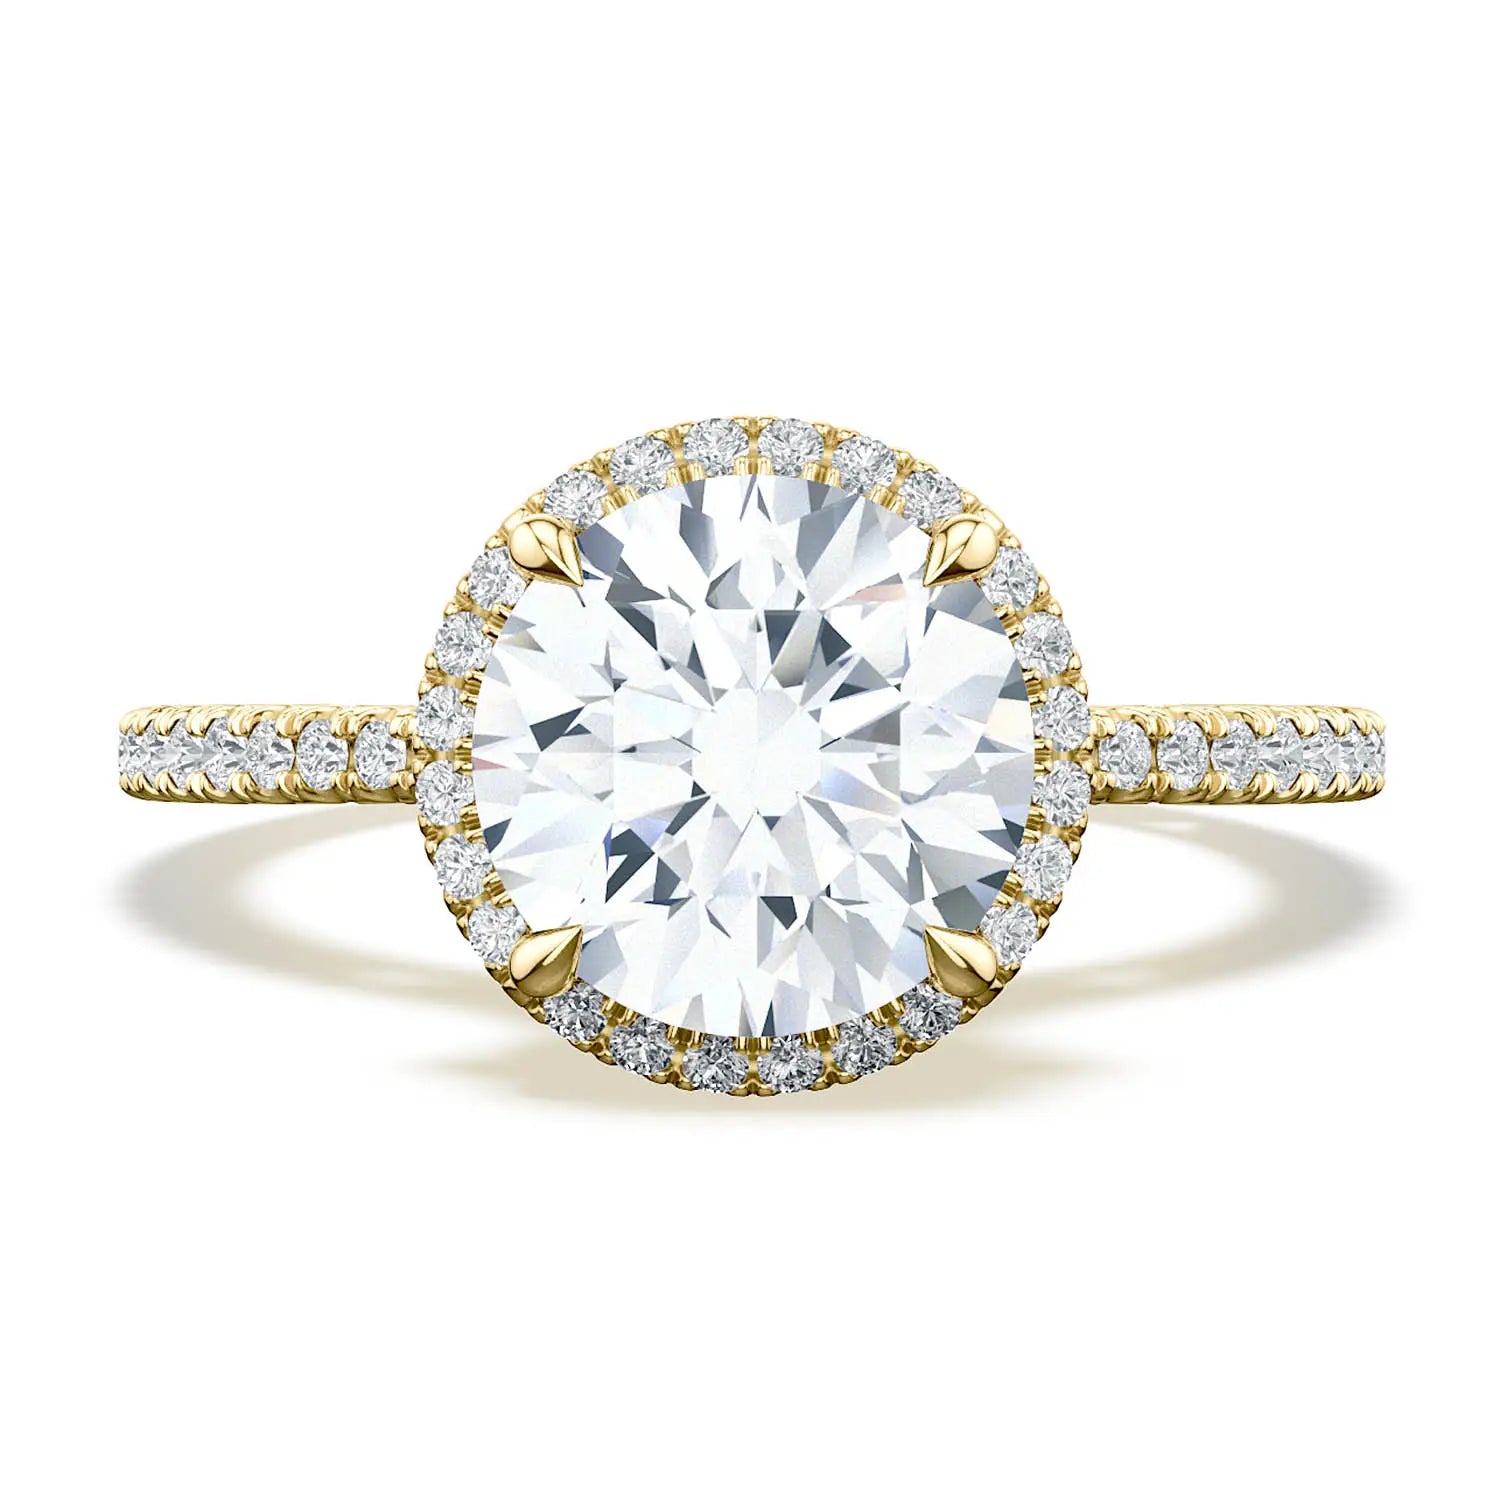 Tacori Simply Tacori Round Bloom Engagement Ring in 18K Yellow Gold